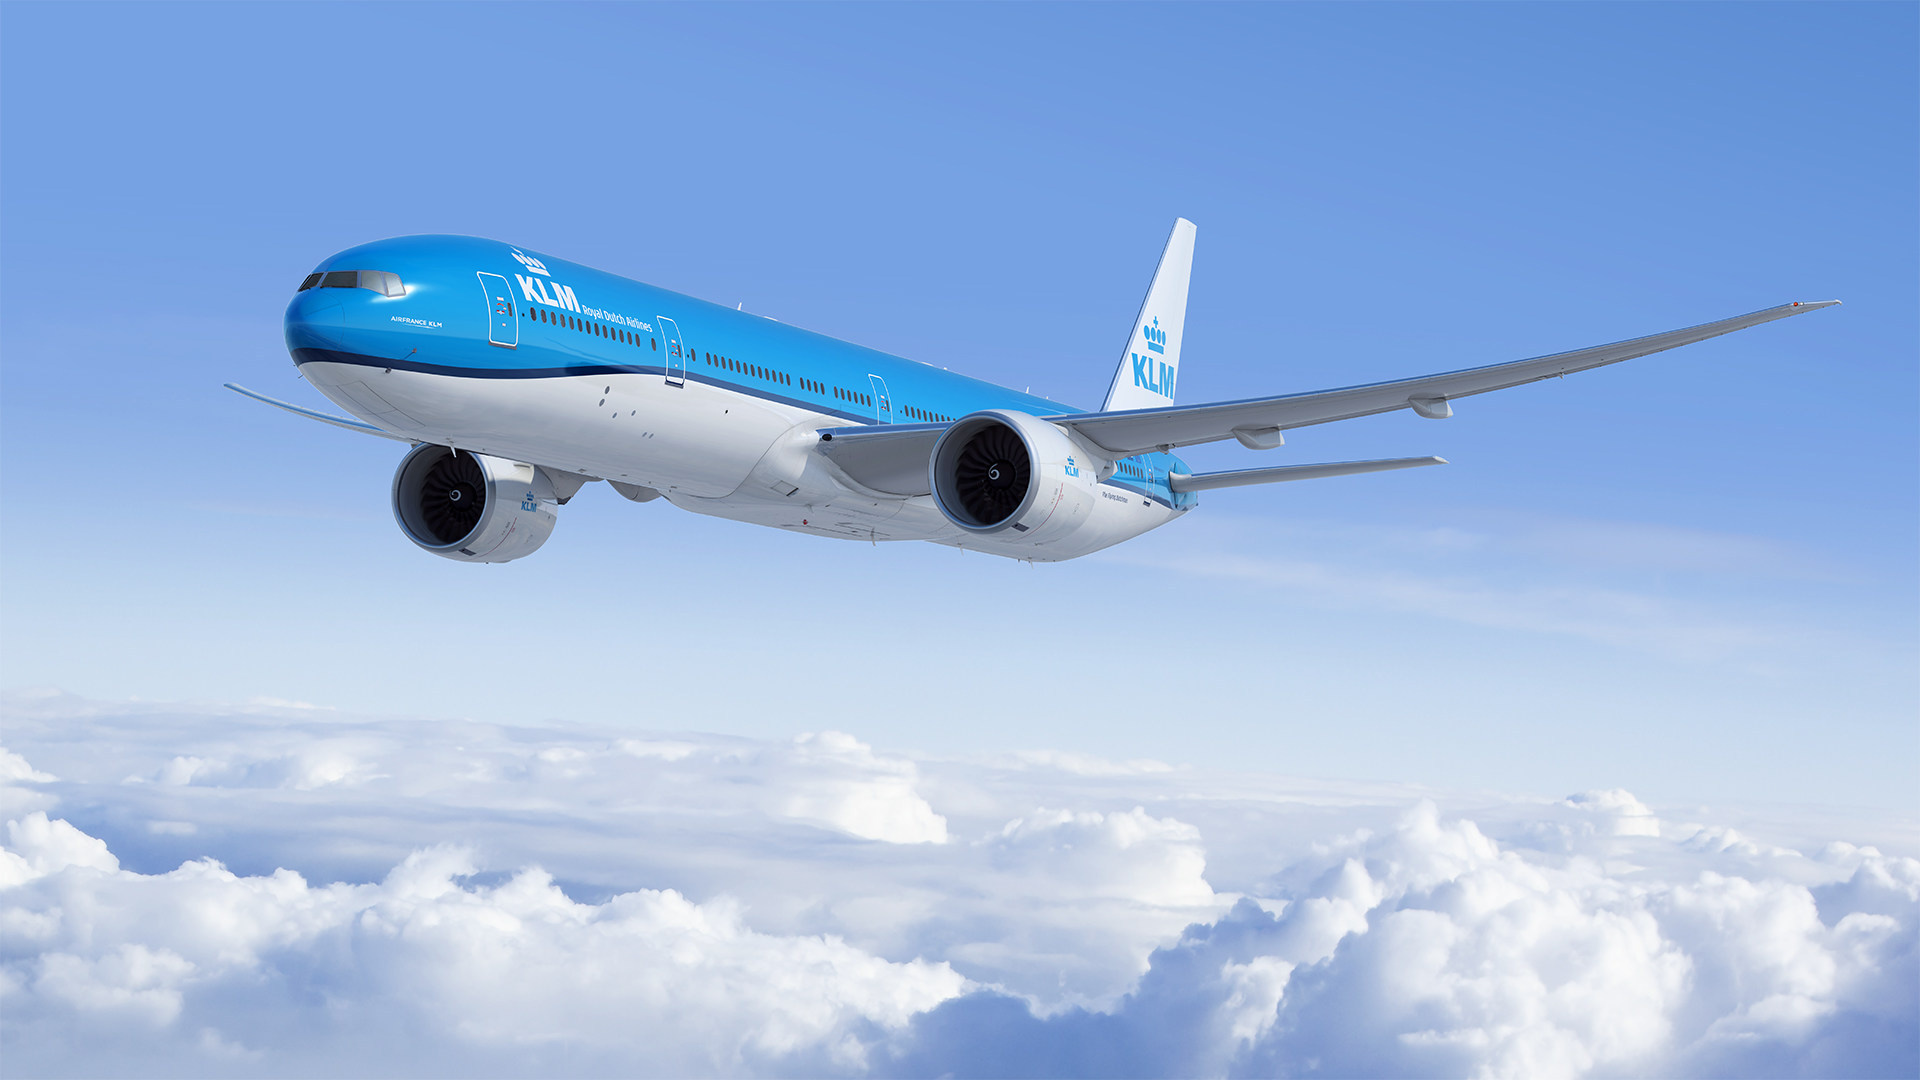 Boeing 777, KLM's pride, Airline excellence, Sky conqueror, 1920x1080 Full HD Desktop